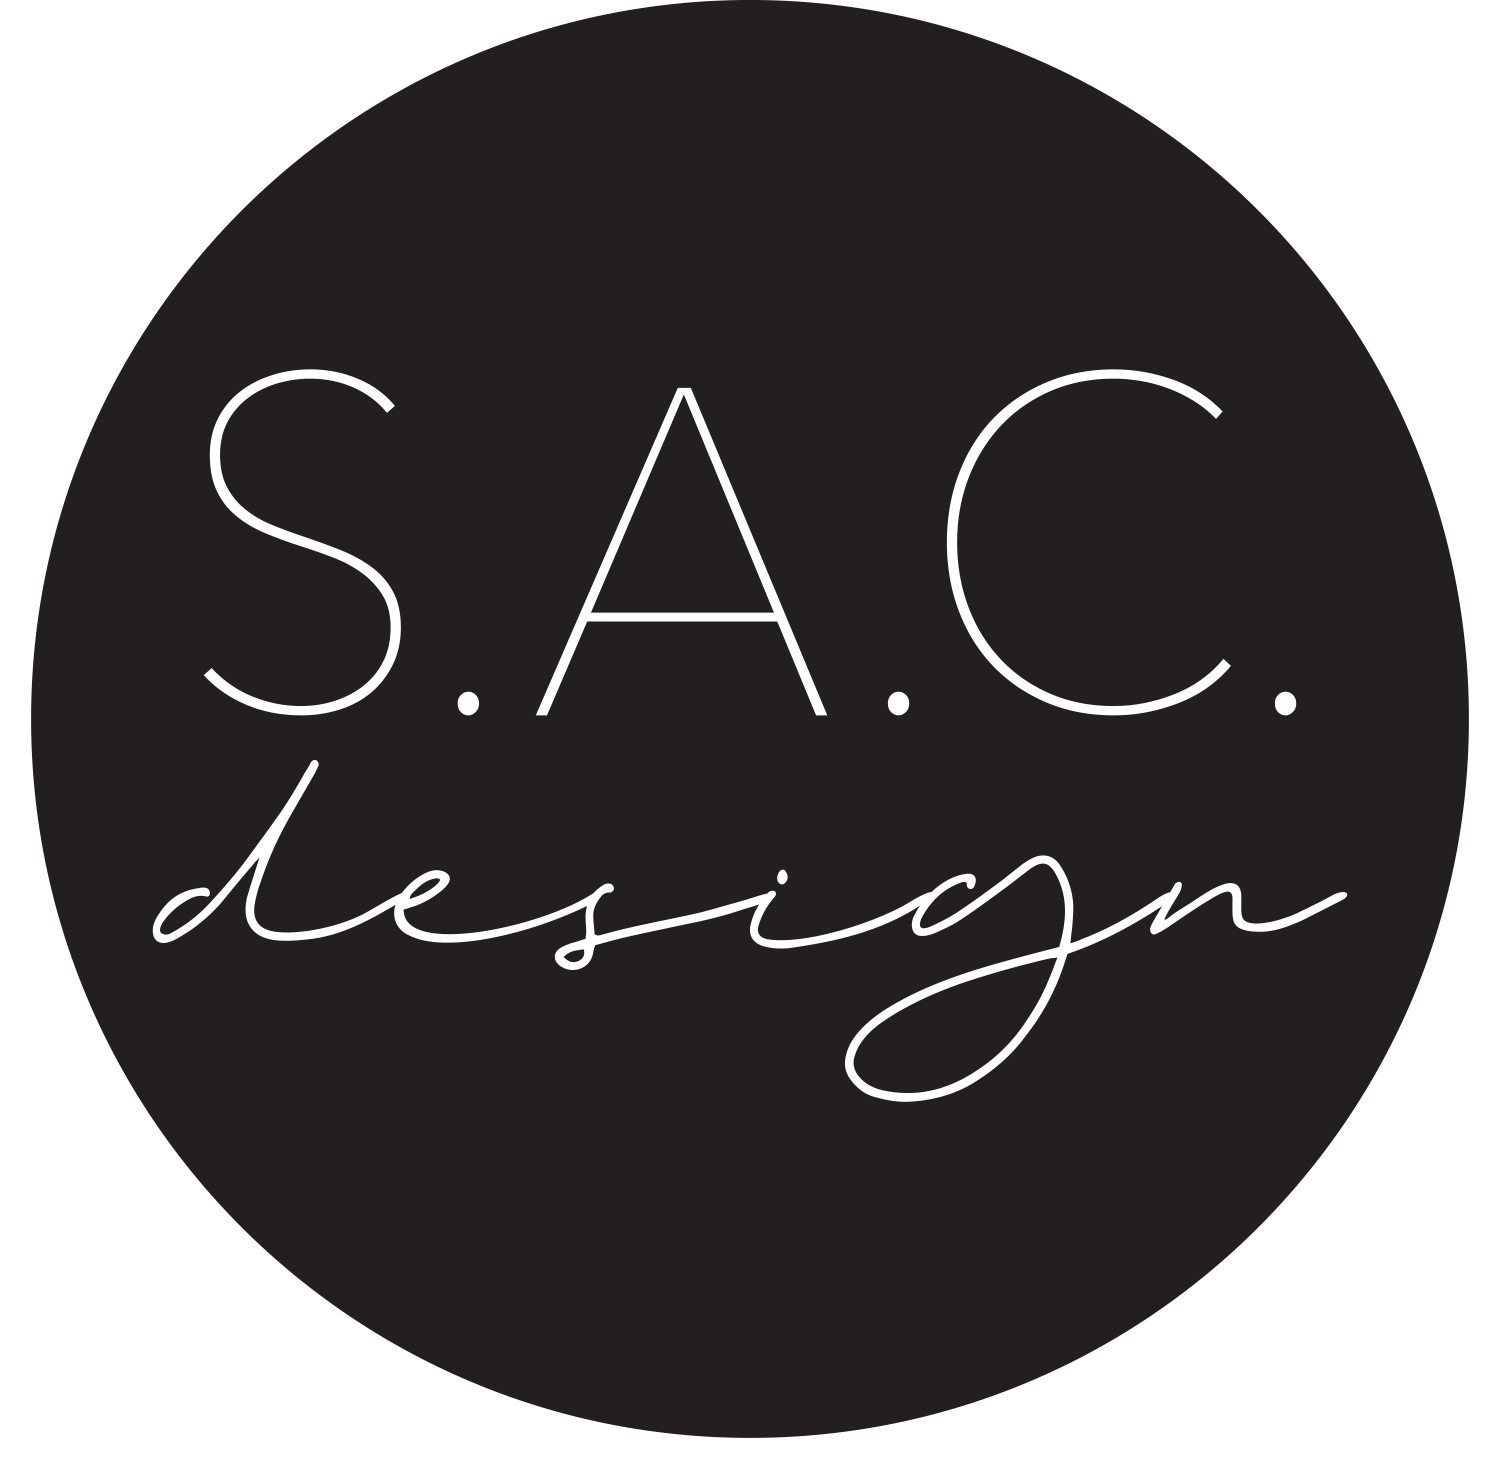 SAC Design